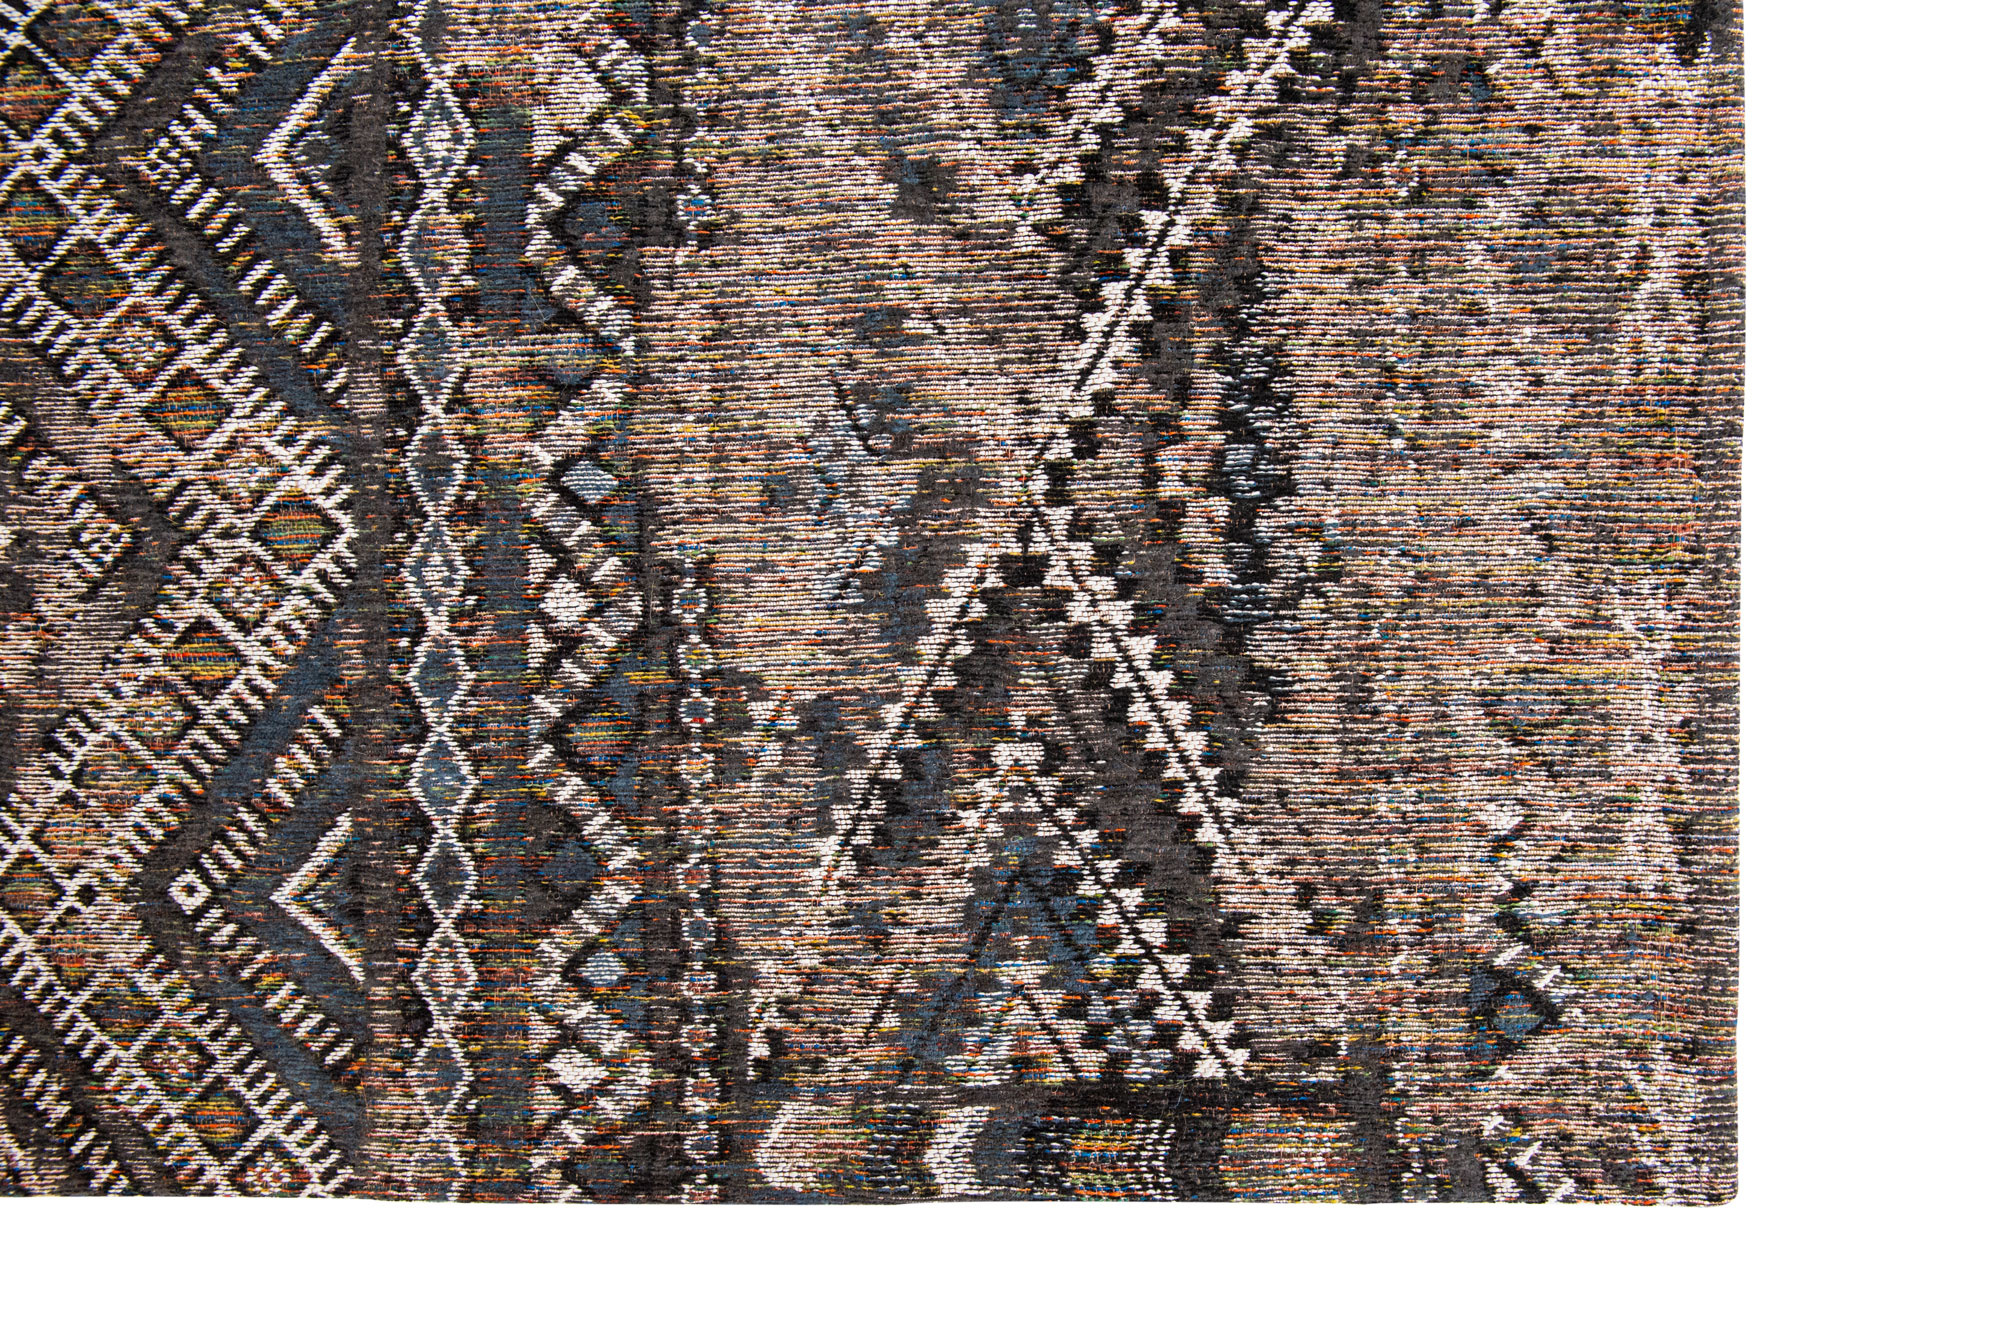 Antiquarian Flatwoven Black Rug ☞ Size: 8' x 11' 2" (240 x 340 cm)